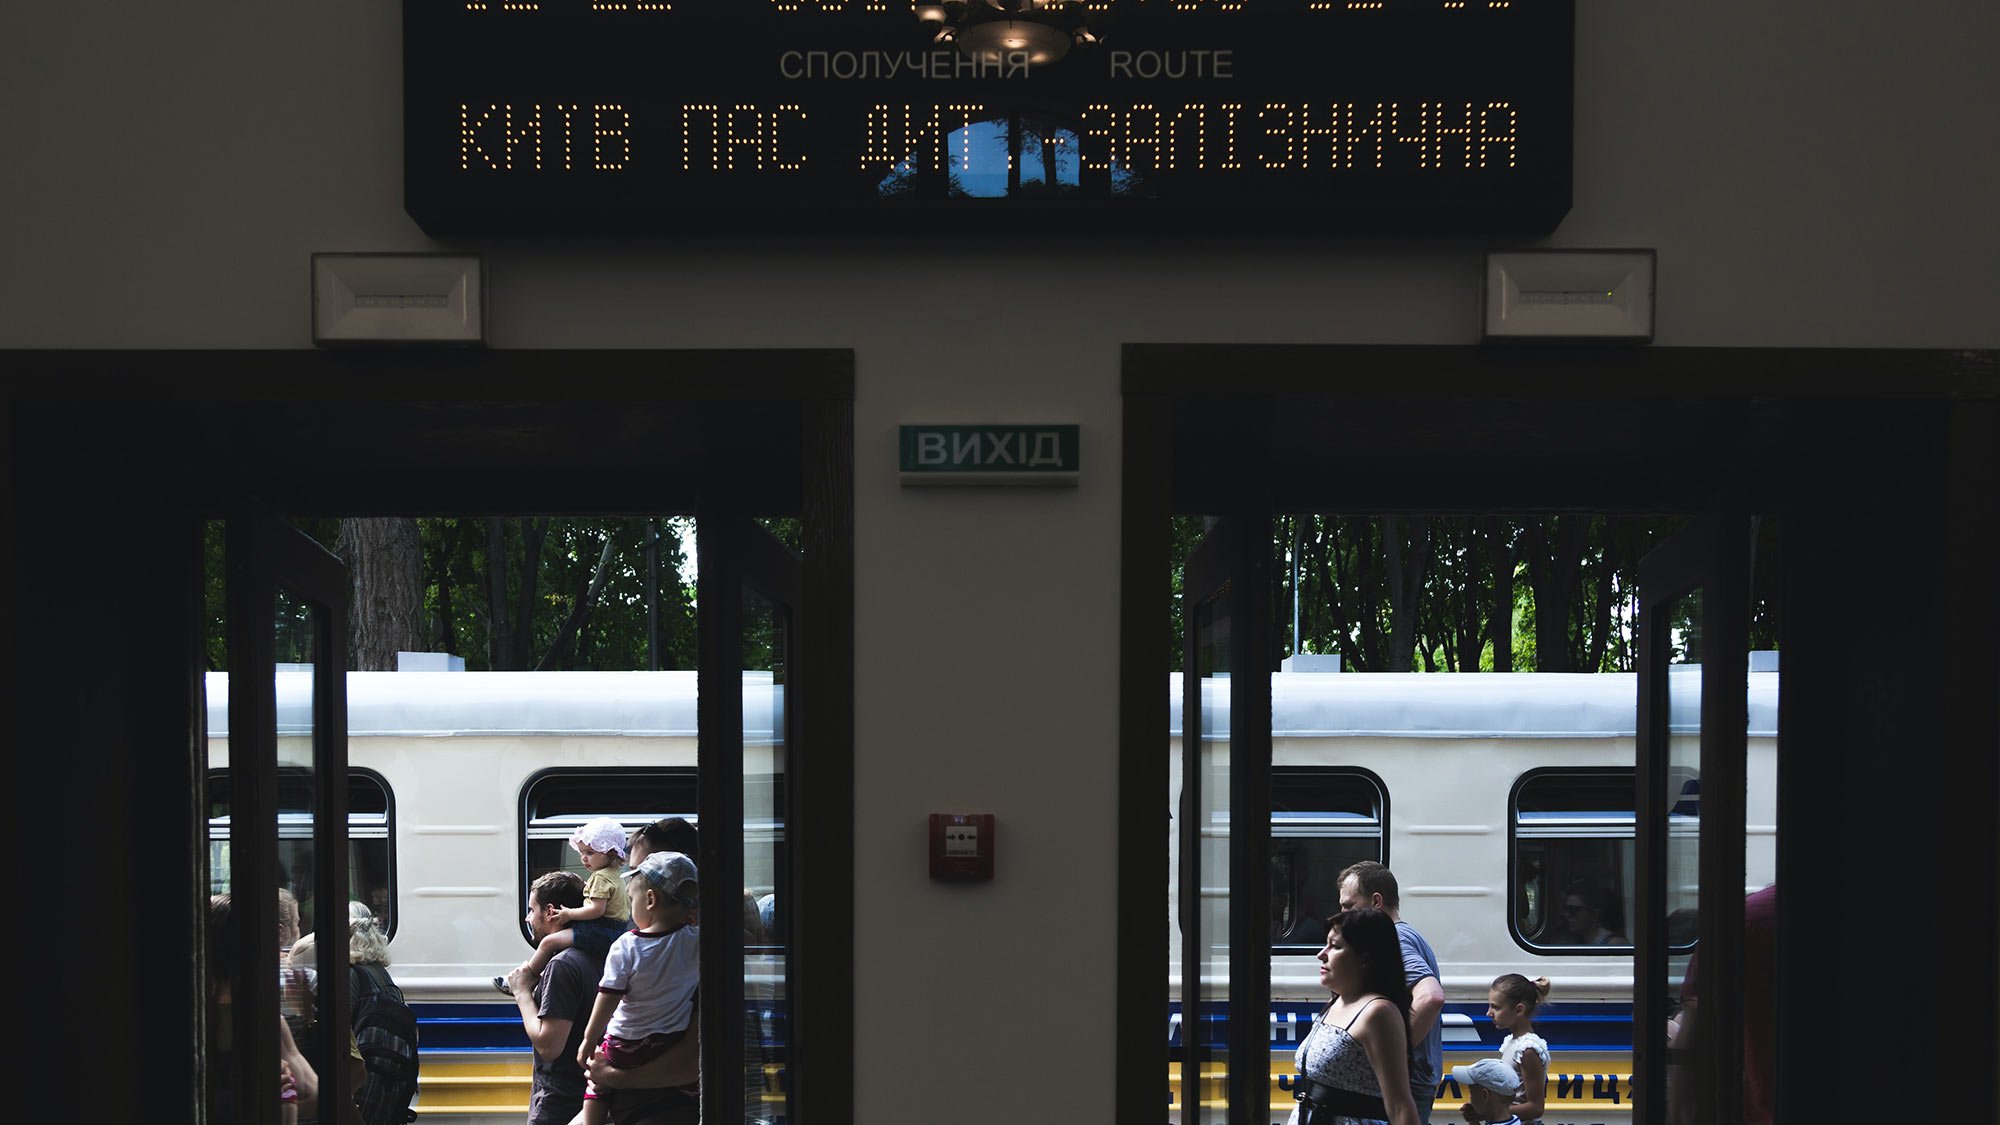 Train display monitor. Image: Unsplash